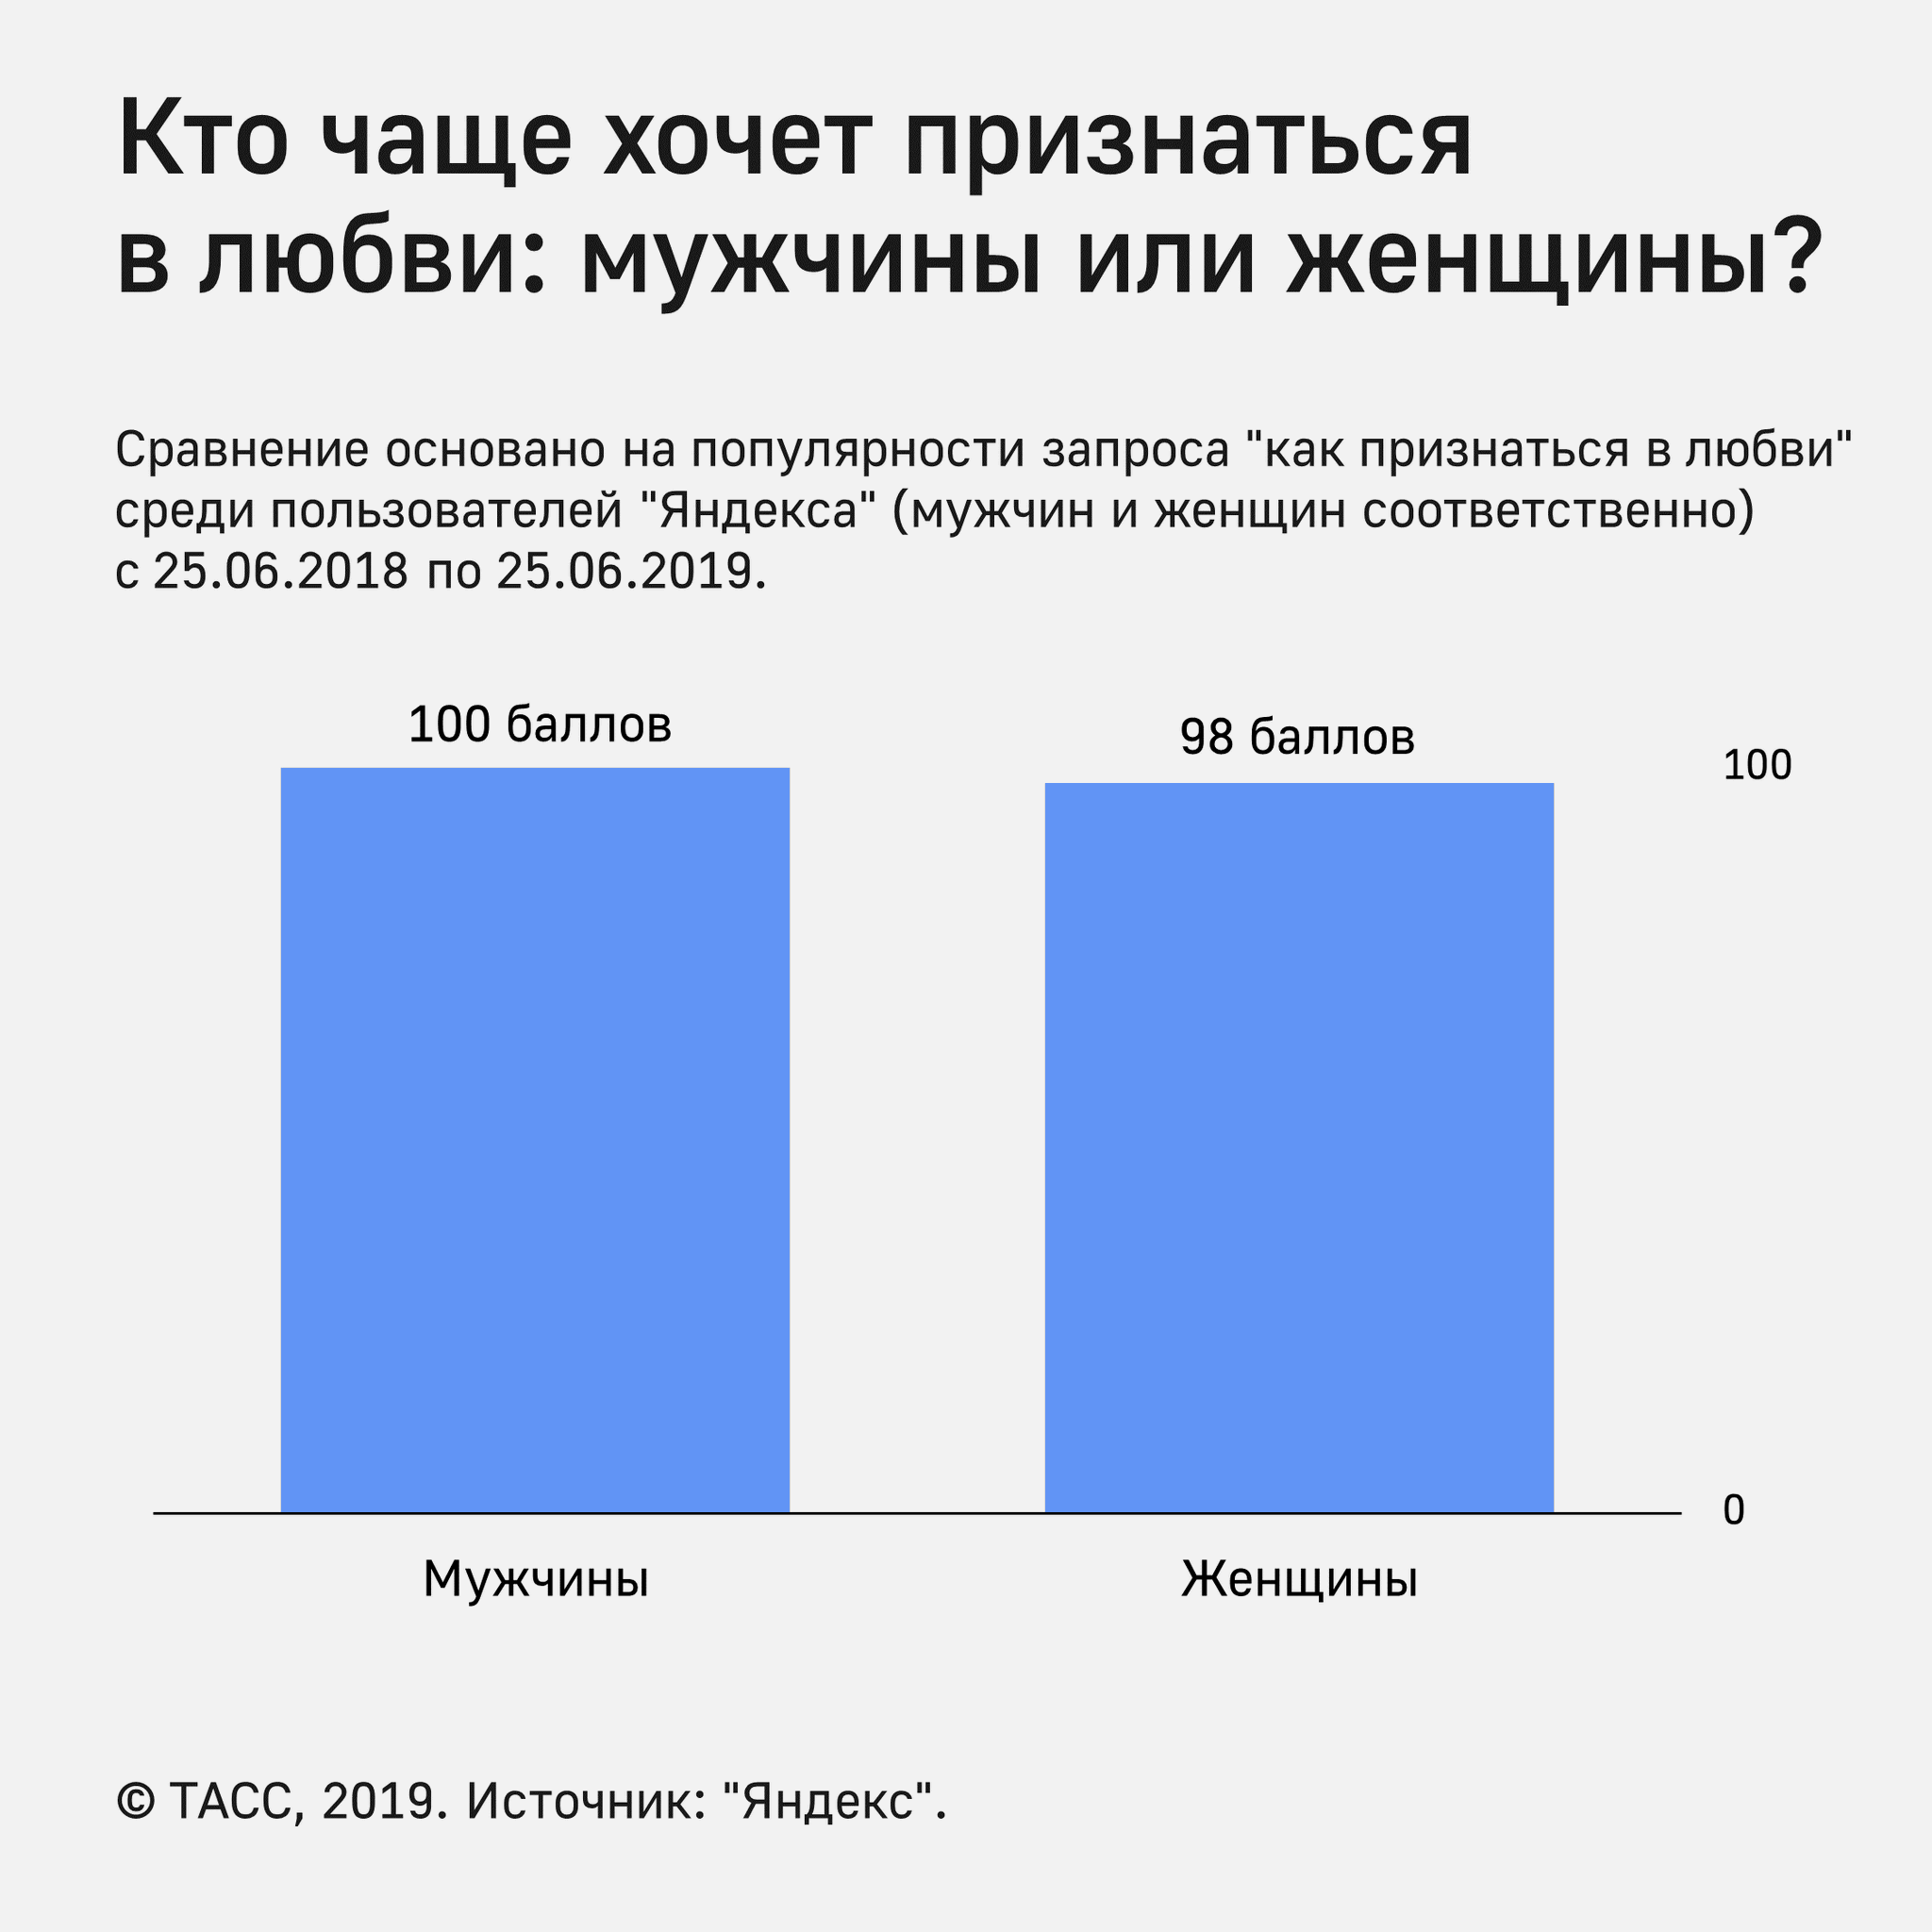 статистика супружеских измен по россии фото 17